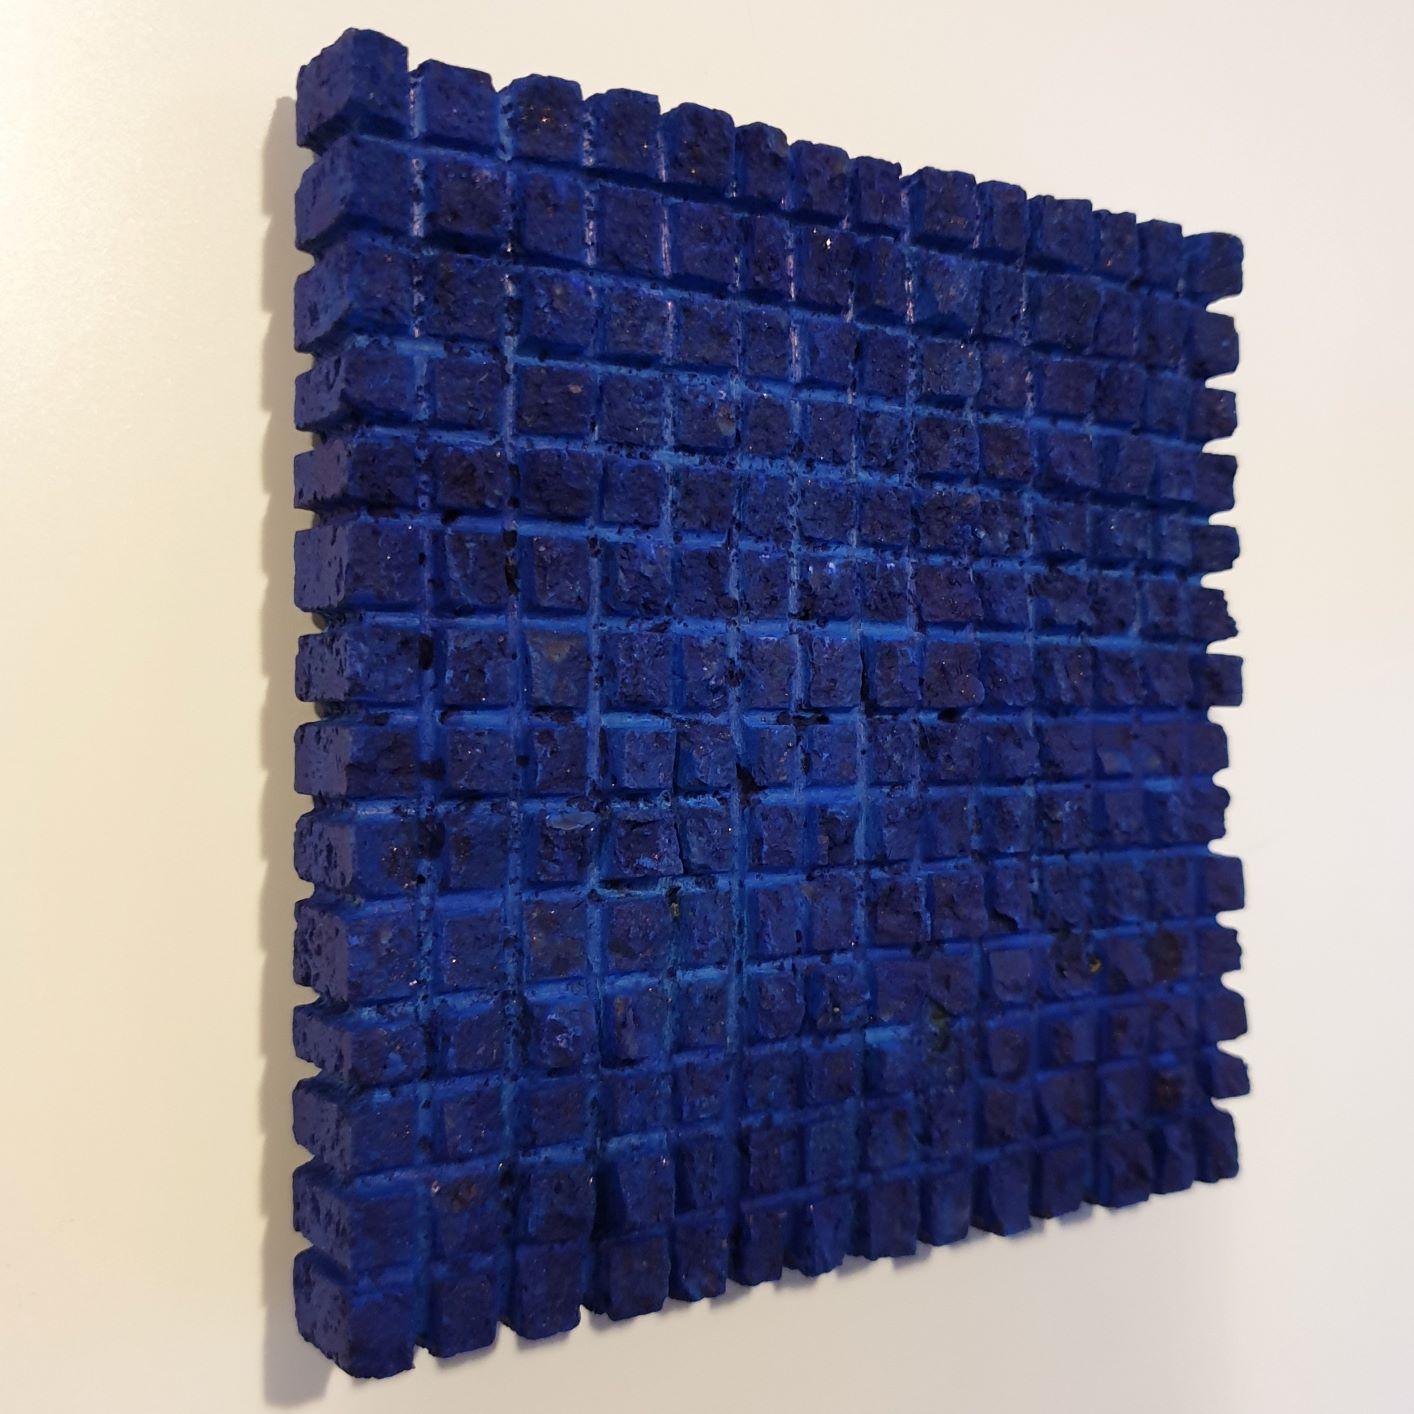 o.T. (Bl15SqS) - blue contemporary modern wall sculpture painting relief - Contemporary Sculpture by Dieter Kränzlein